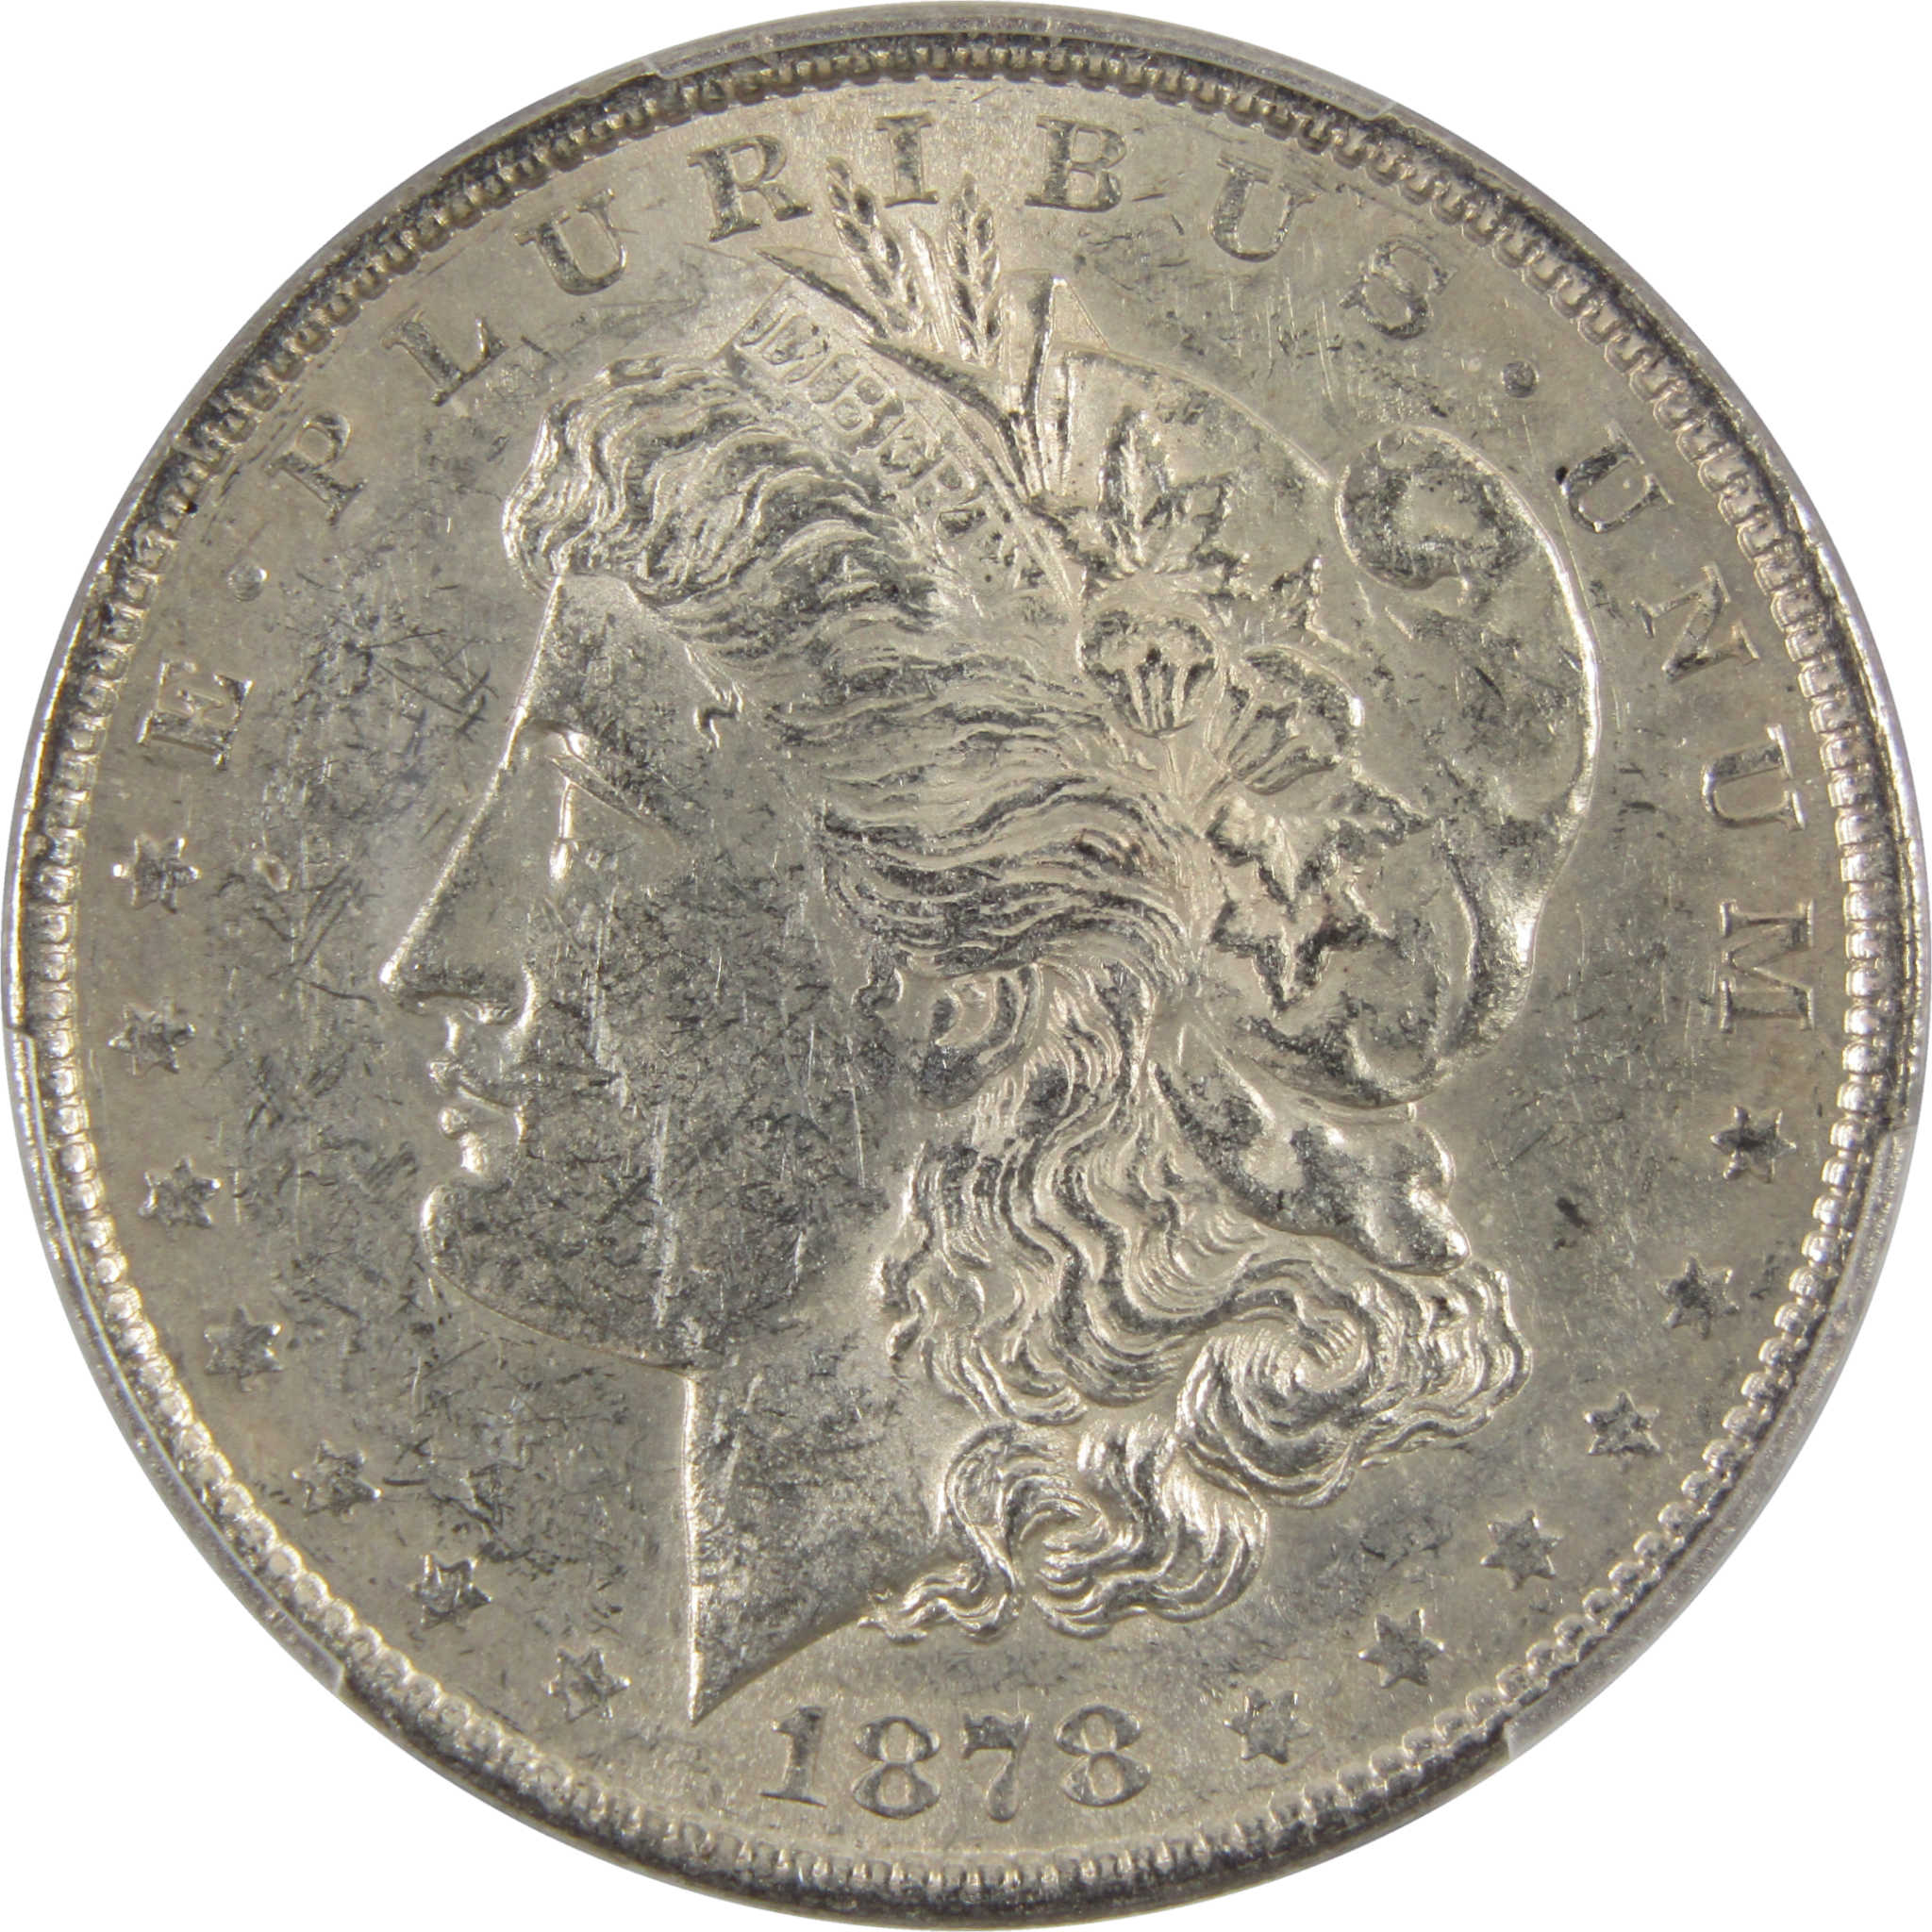 1878 7TF Rev 79 Morgan Dollar AU 53 PCGS 90% Silver $1 Coin SKU:I7632 - Morgan coin - Morgan silver dollar - Morgan silver dollar for sale - Profile Coins &amp; Collectibles